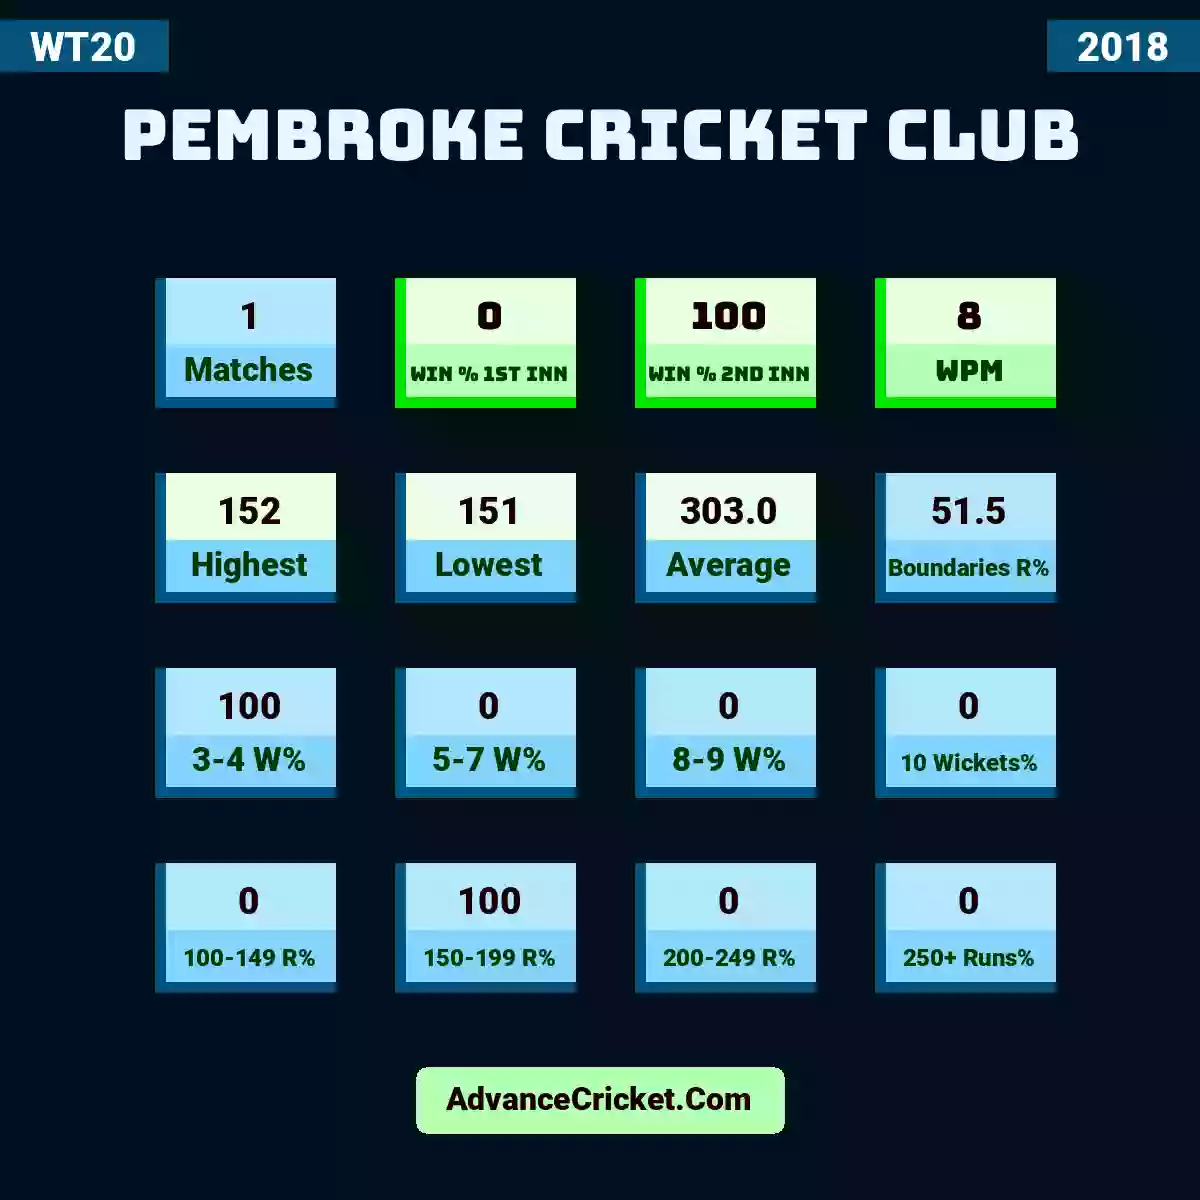 Image showing Pembroke Cricket Club with Matches: 1, Win % 1st Inn: 0, Win % 2nd Inn: 100, WPM: 8, Highest: 152, Lowest: 151, Average: 303.0, Boundaries R%: 51.5, 3-4 W%: 100, 5-7 W%: 0, 8-9 W%: 0, 10 Wickets%: 0, 100-149 R%: 0, 150-199 R%: 100, 200-249 R%: 0, 250+ Runs%: 0.